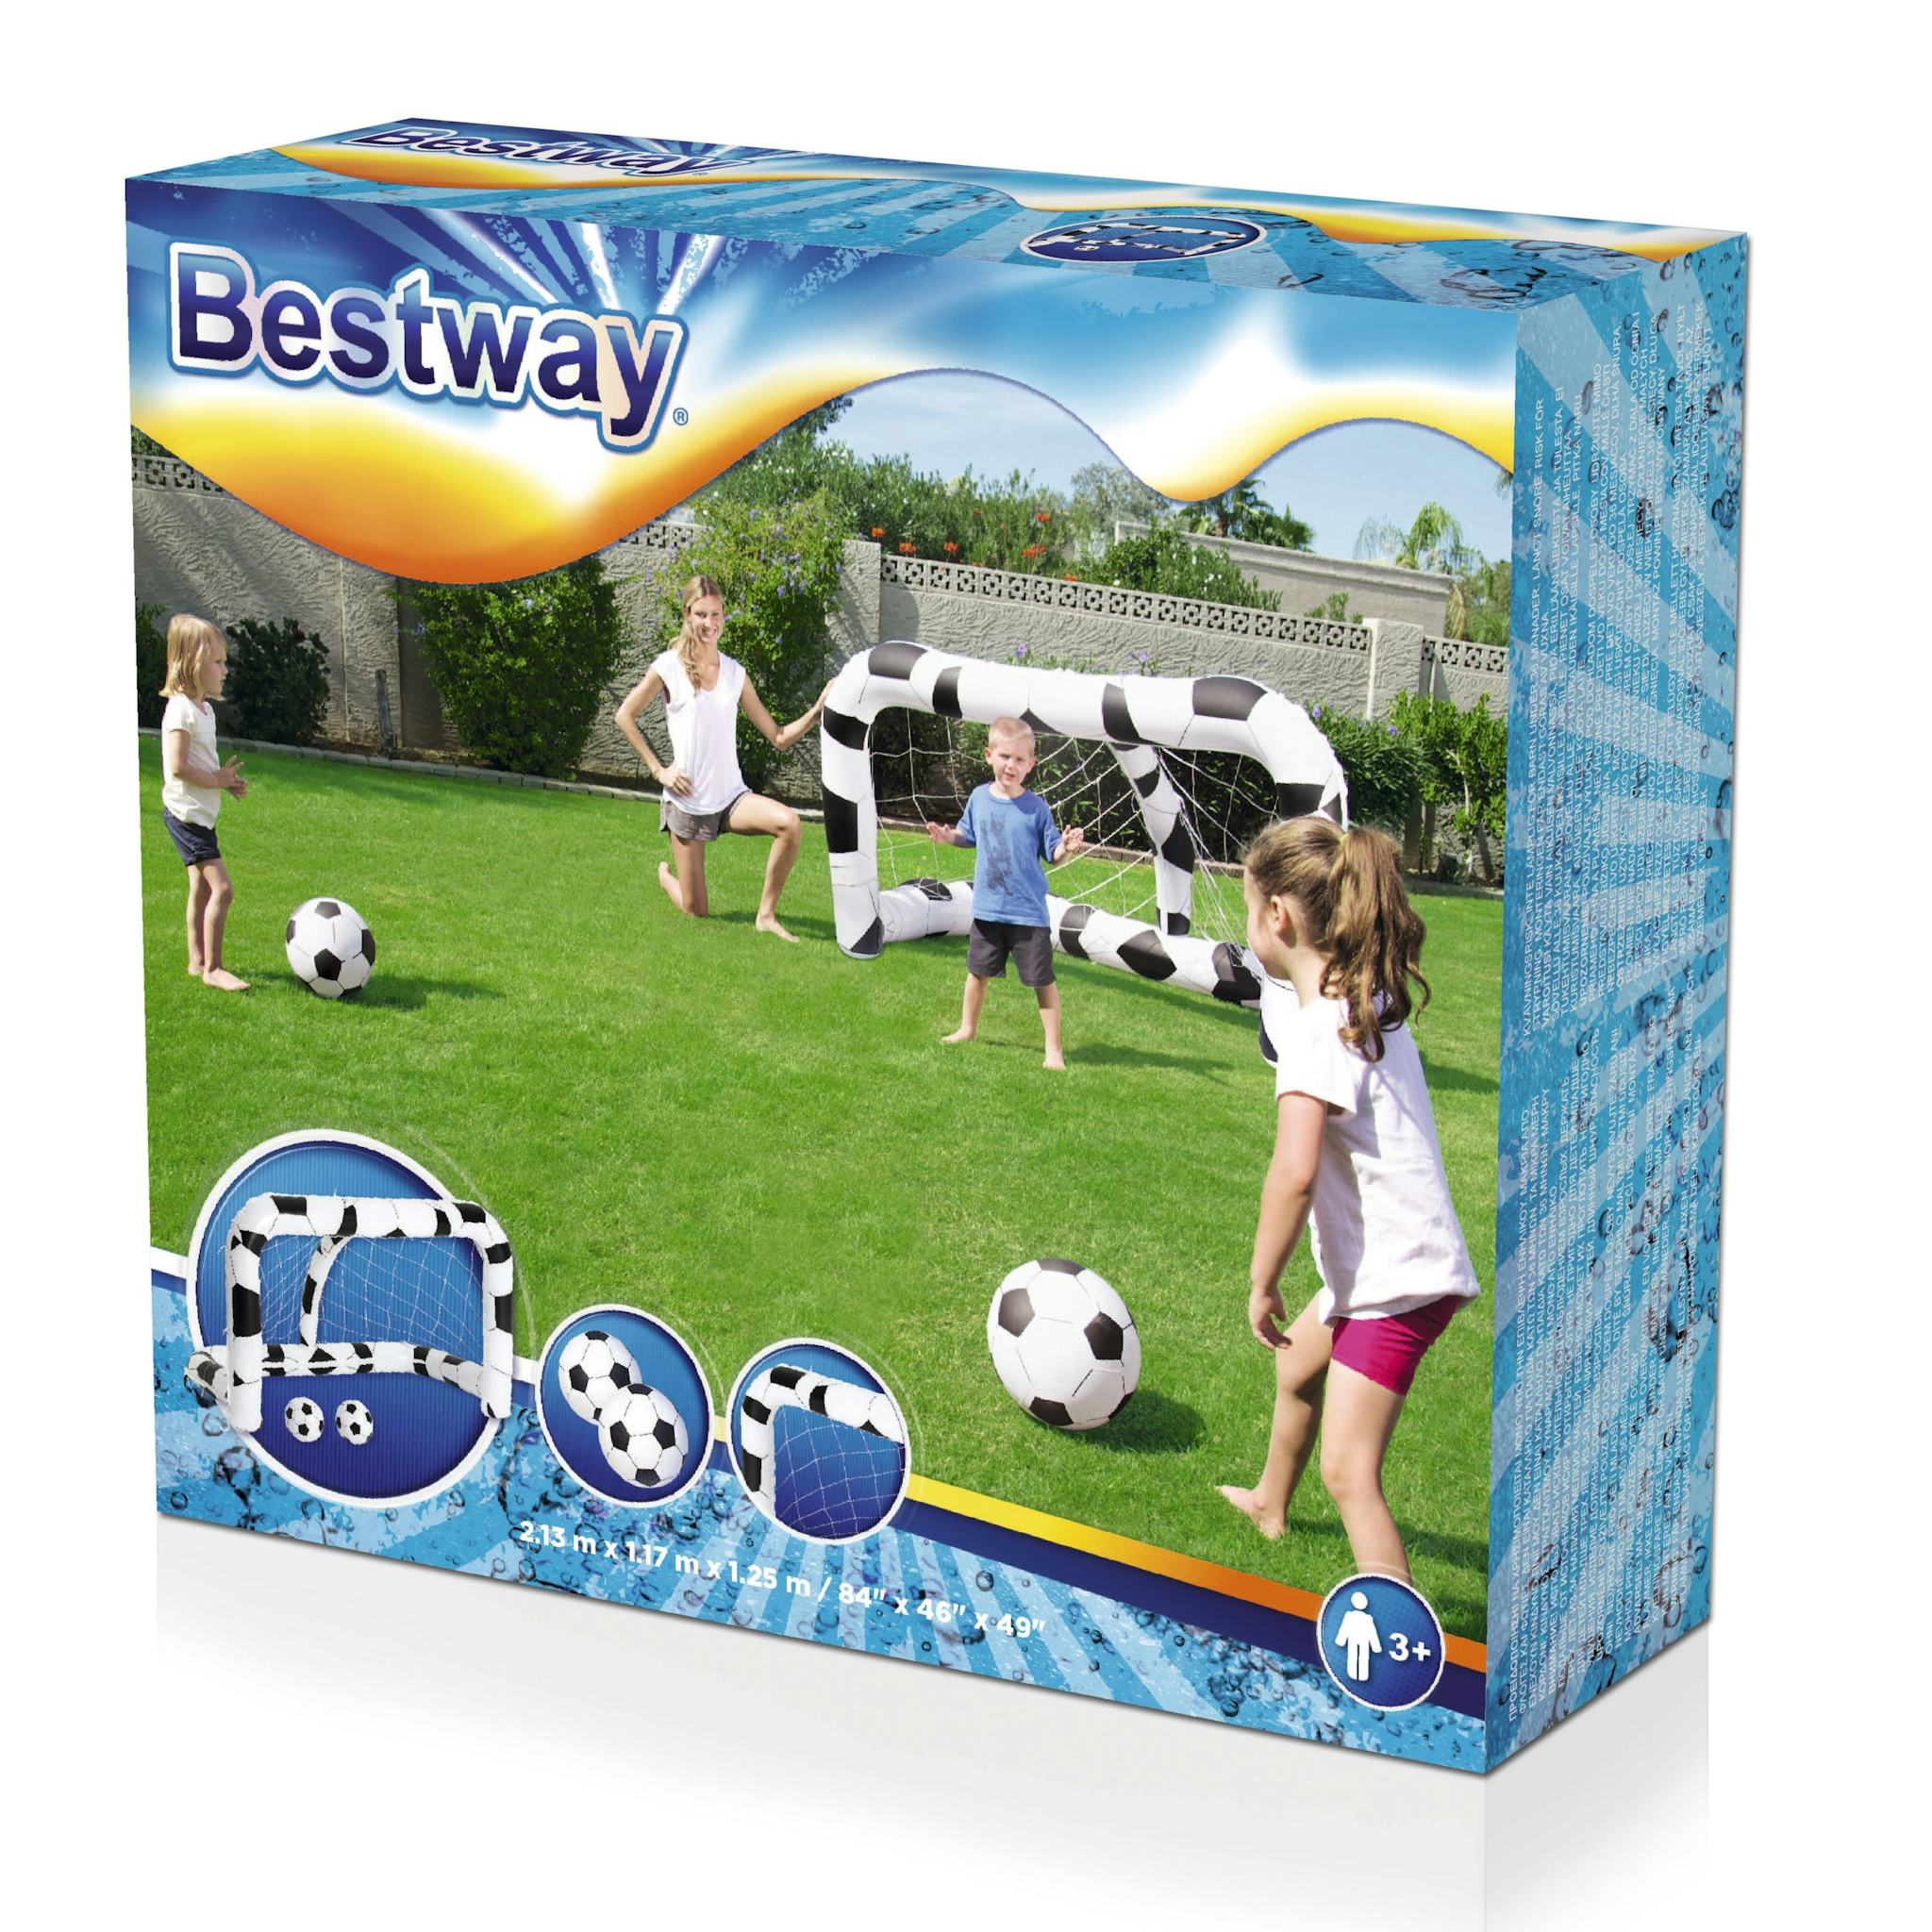 Giochi gonfiabili per bambini Rete da calcio gonfiabile Bestway 7